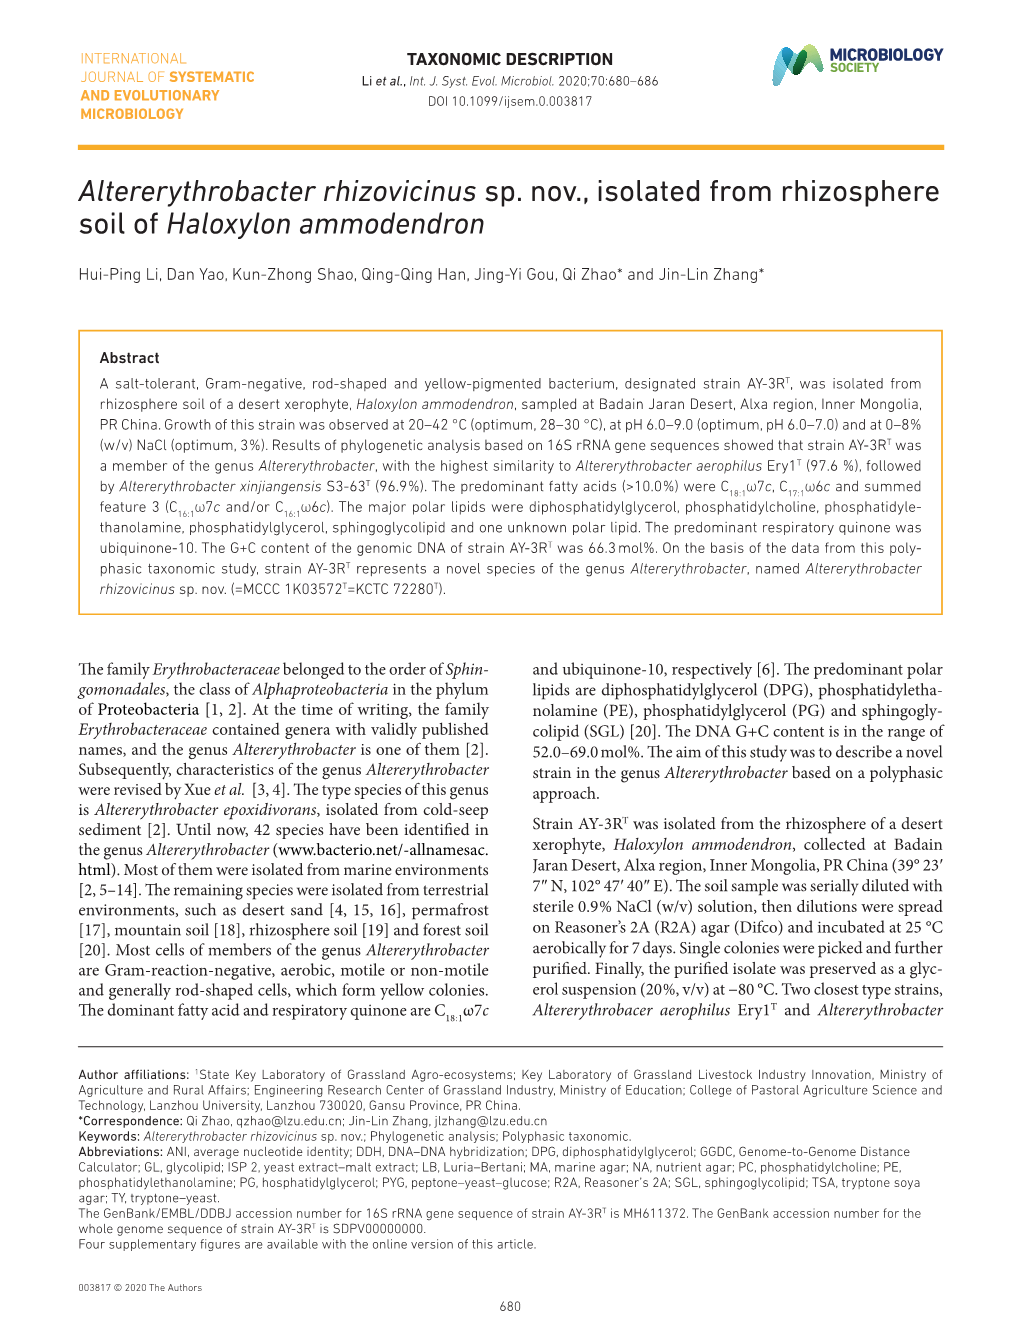 Altererythrobacter Rhizovicinus Sp. Nov., Isolated from Rhizosphere Soil of Haloxylon Ammodendron